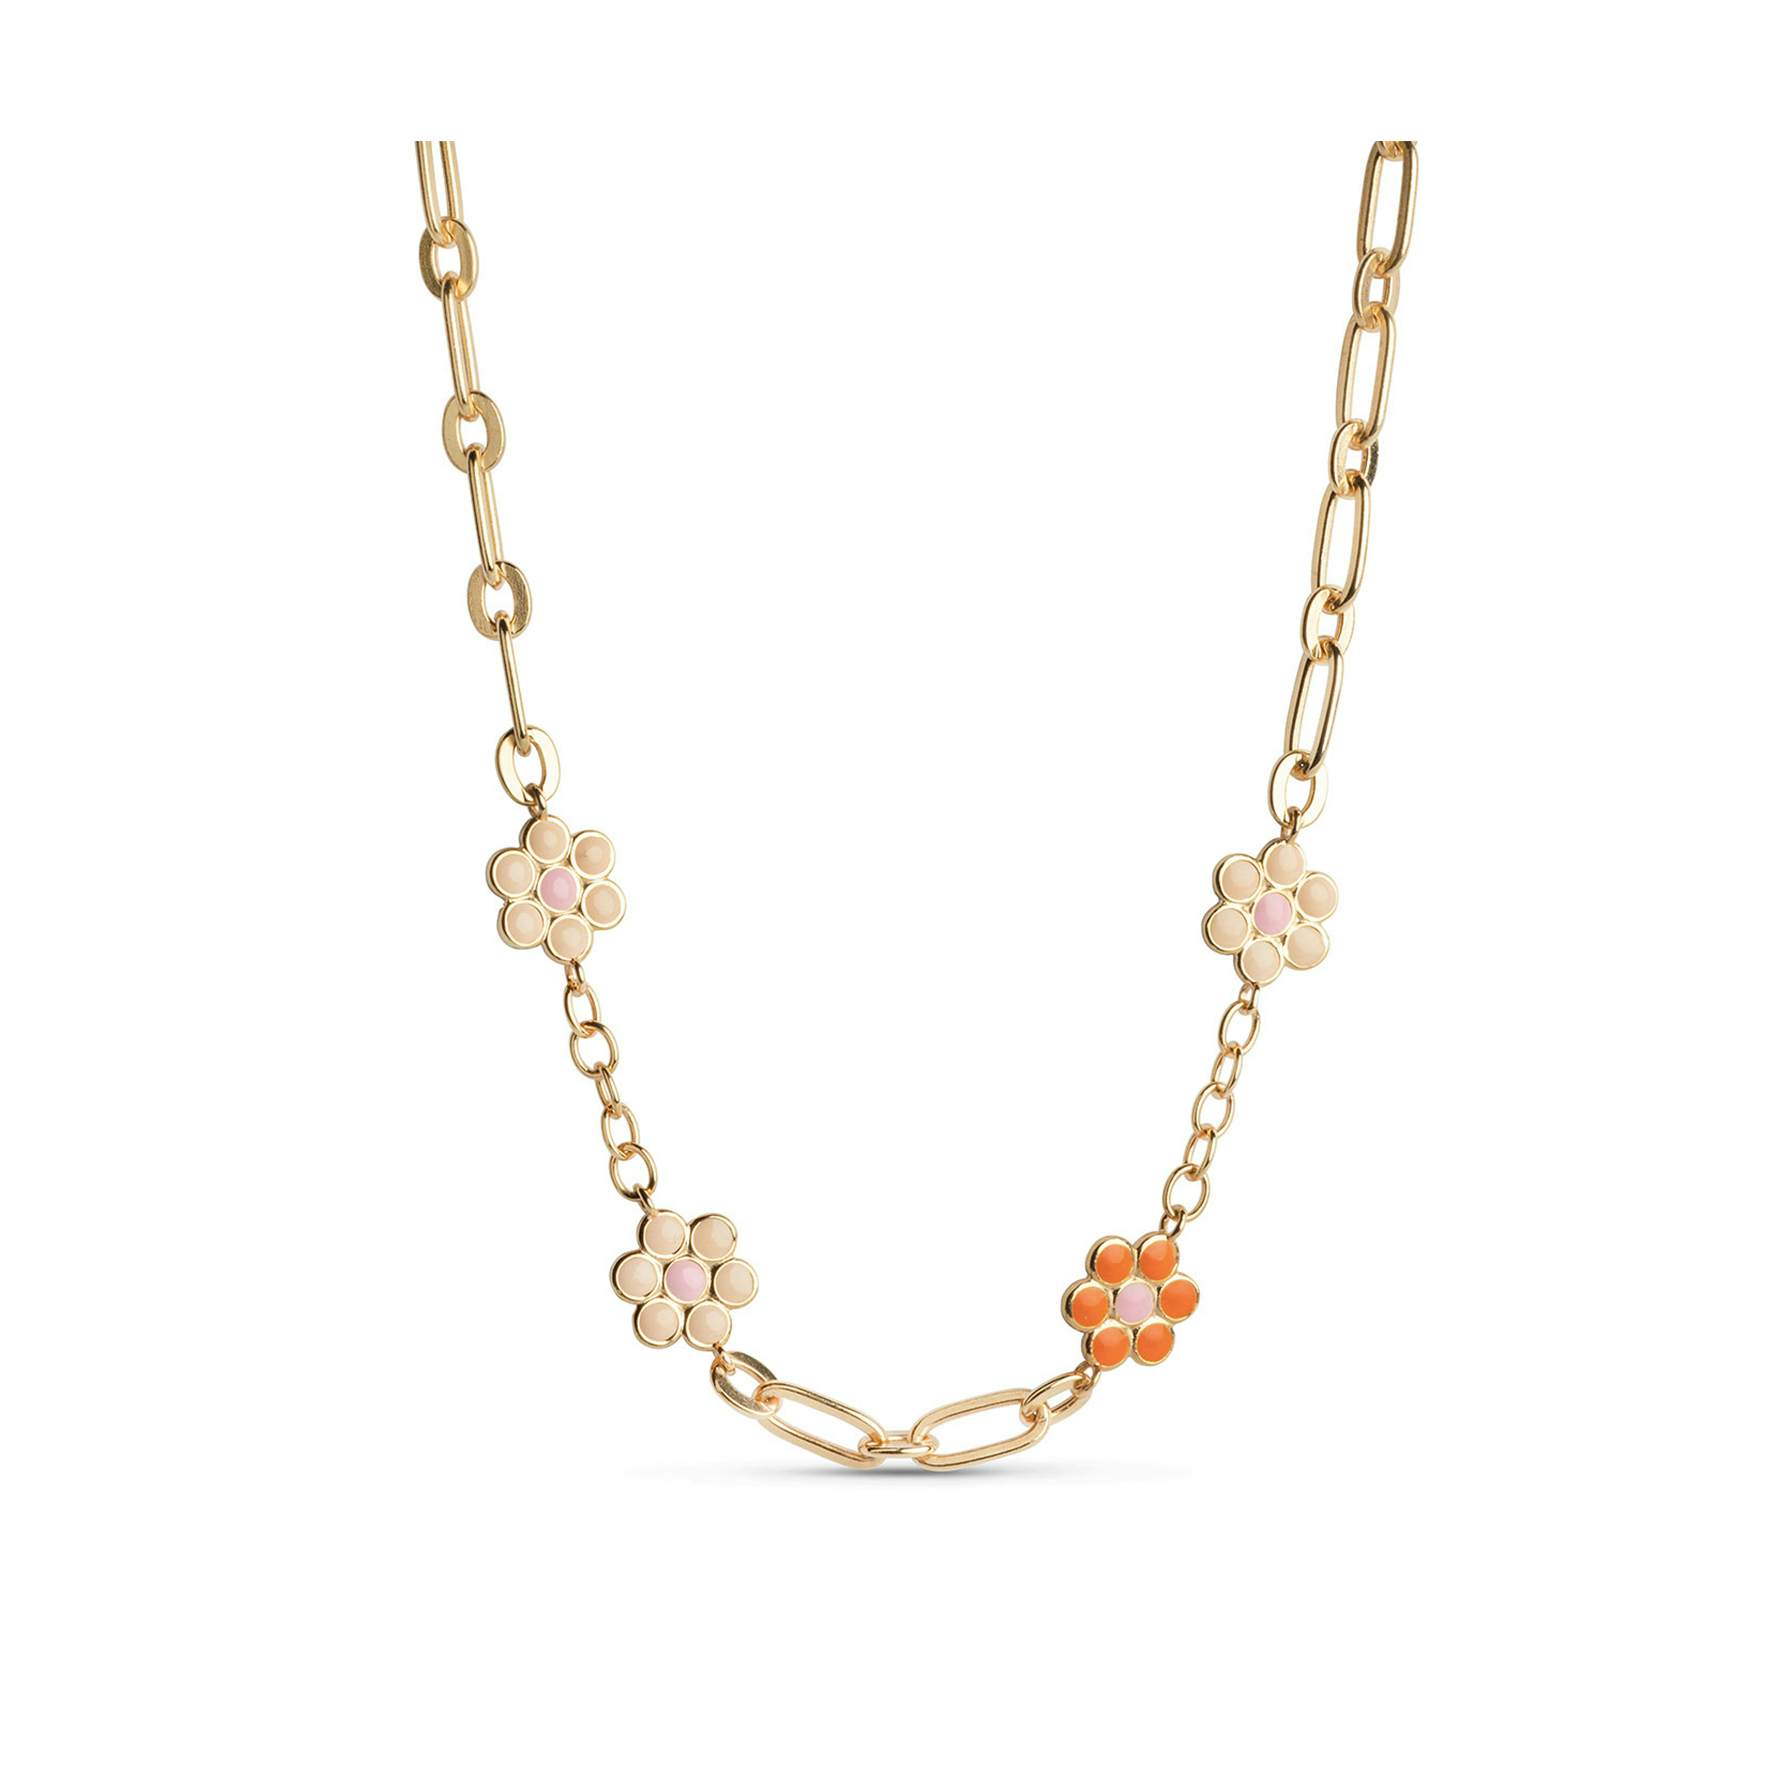 Blossom Necklace Orange/Beige/Light Blue/Light Pink von Enamel Copenhagen in Vergoldet-Silber Sterling 925||Blank